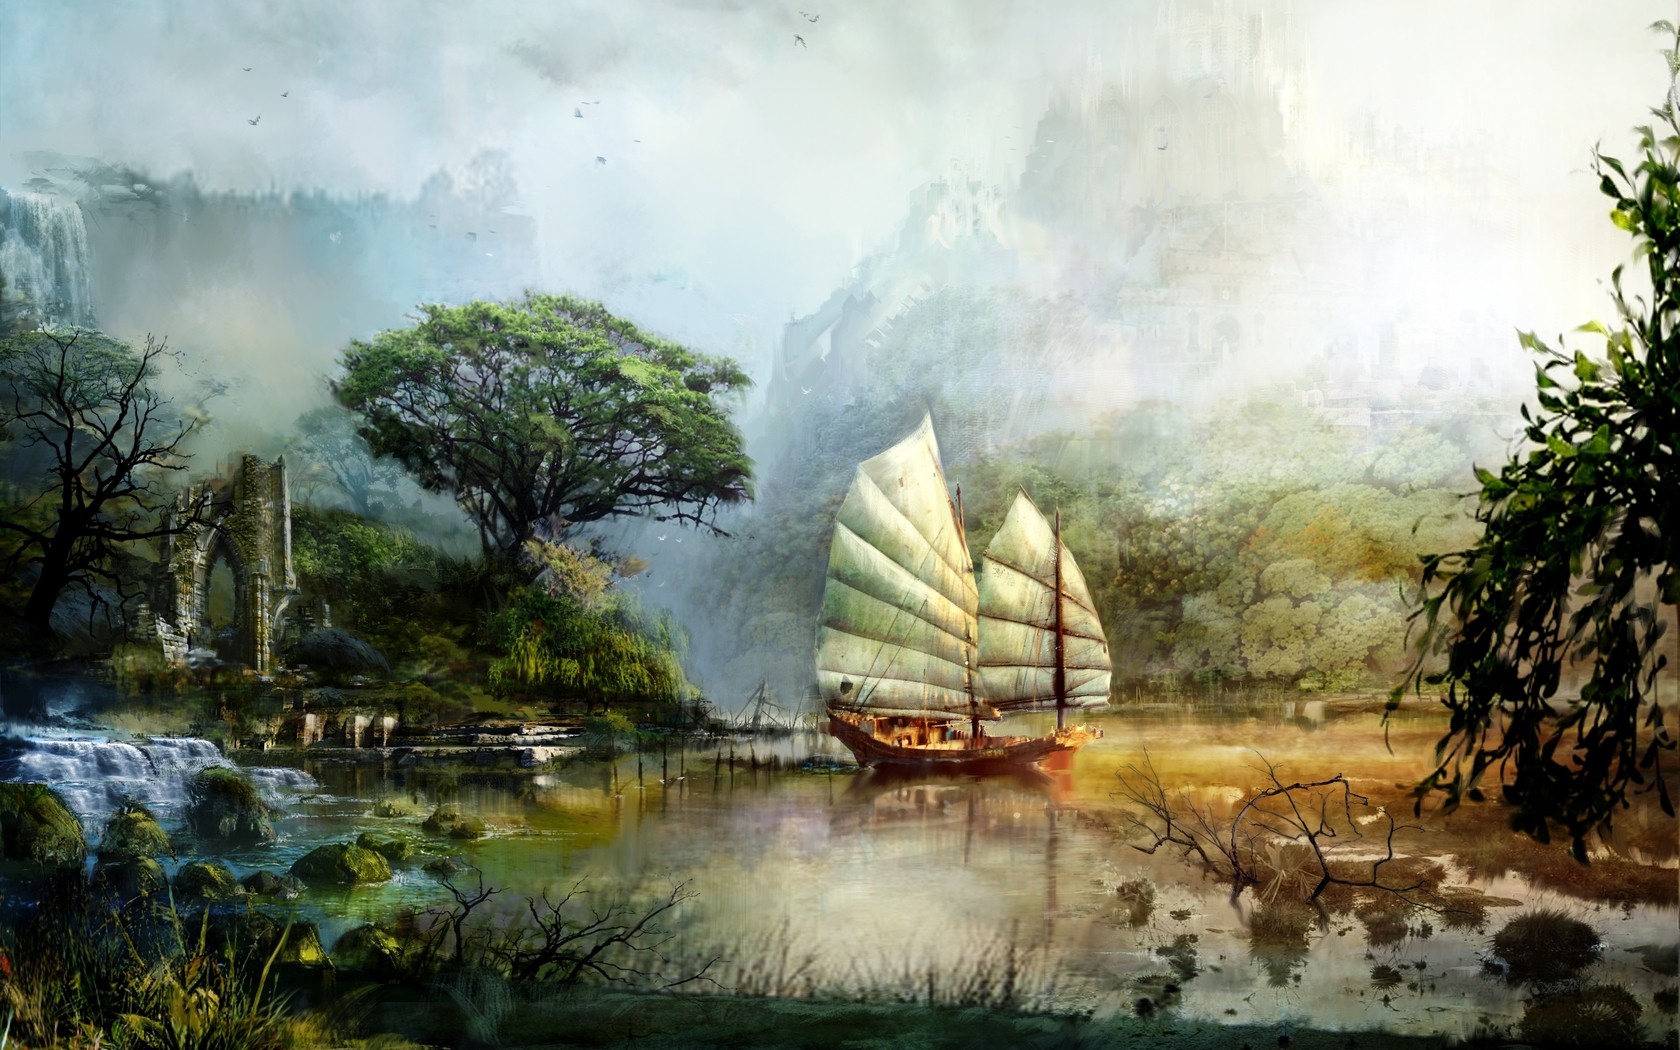 General 1680x1050 fantasy art artwork painting Guild Wars 2 PC gaming video game art vehicle landscape ruins water trees